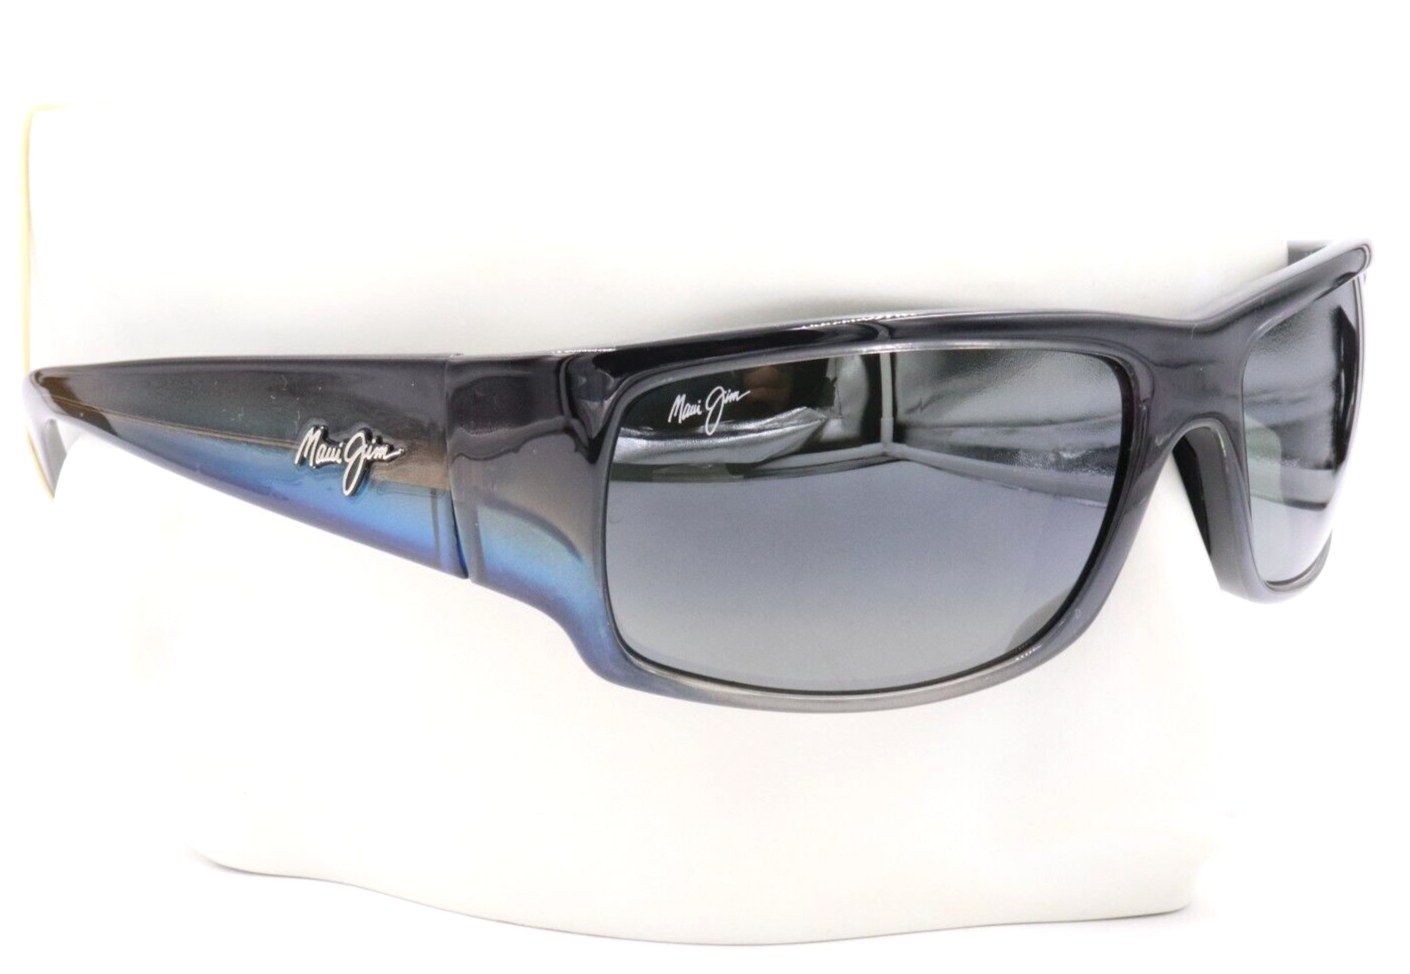 Pre-owned Maui Jim World Cup Marlin Neutral Gray Polarized Sunglasses 266-03f $279